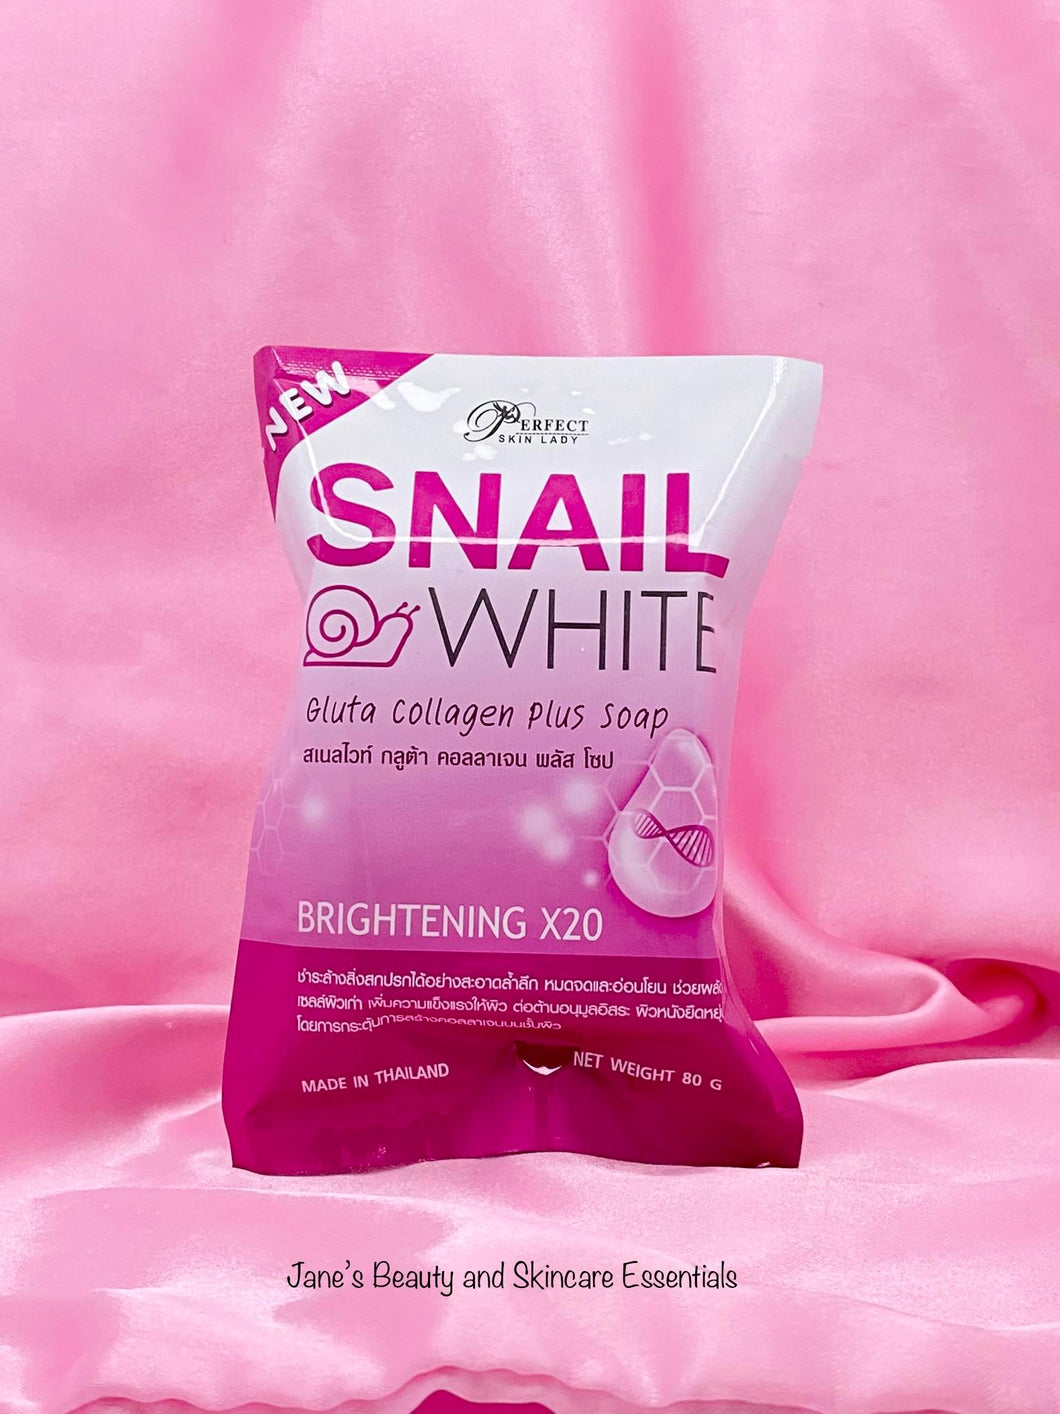 Snail White GIuta Collagen Plus Soap 80g Brightening x20 Authentic Thailand